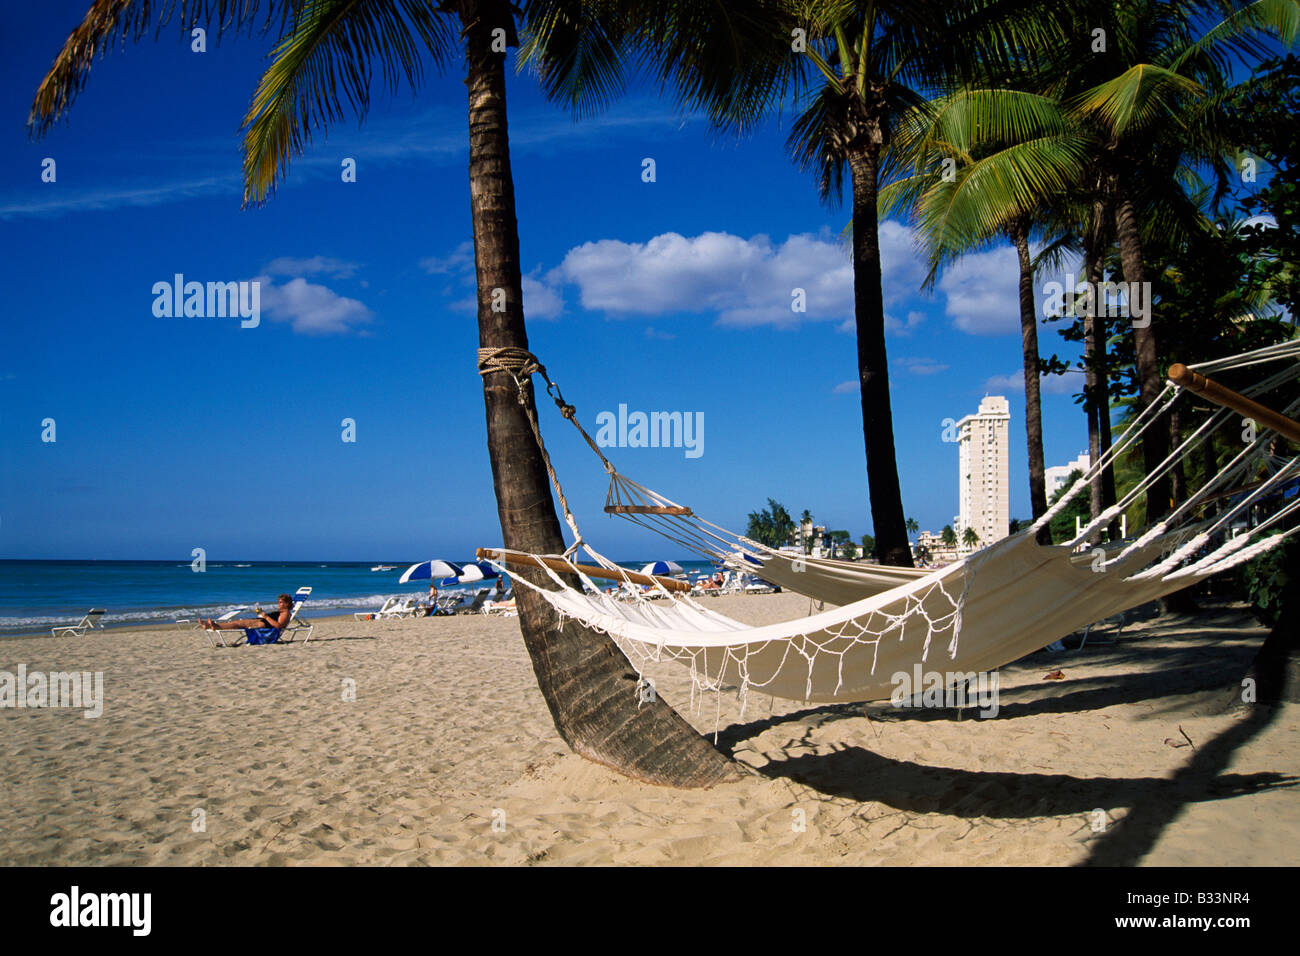 Isla Verde Beach in San Juan Puerto Rico Caribbean Stock Photo